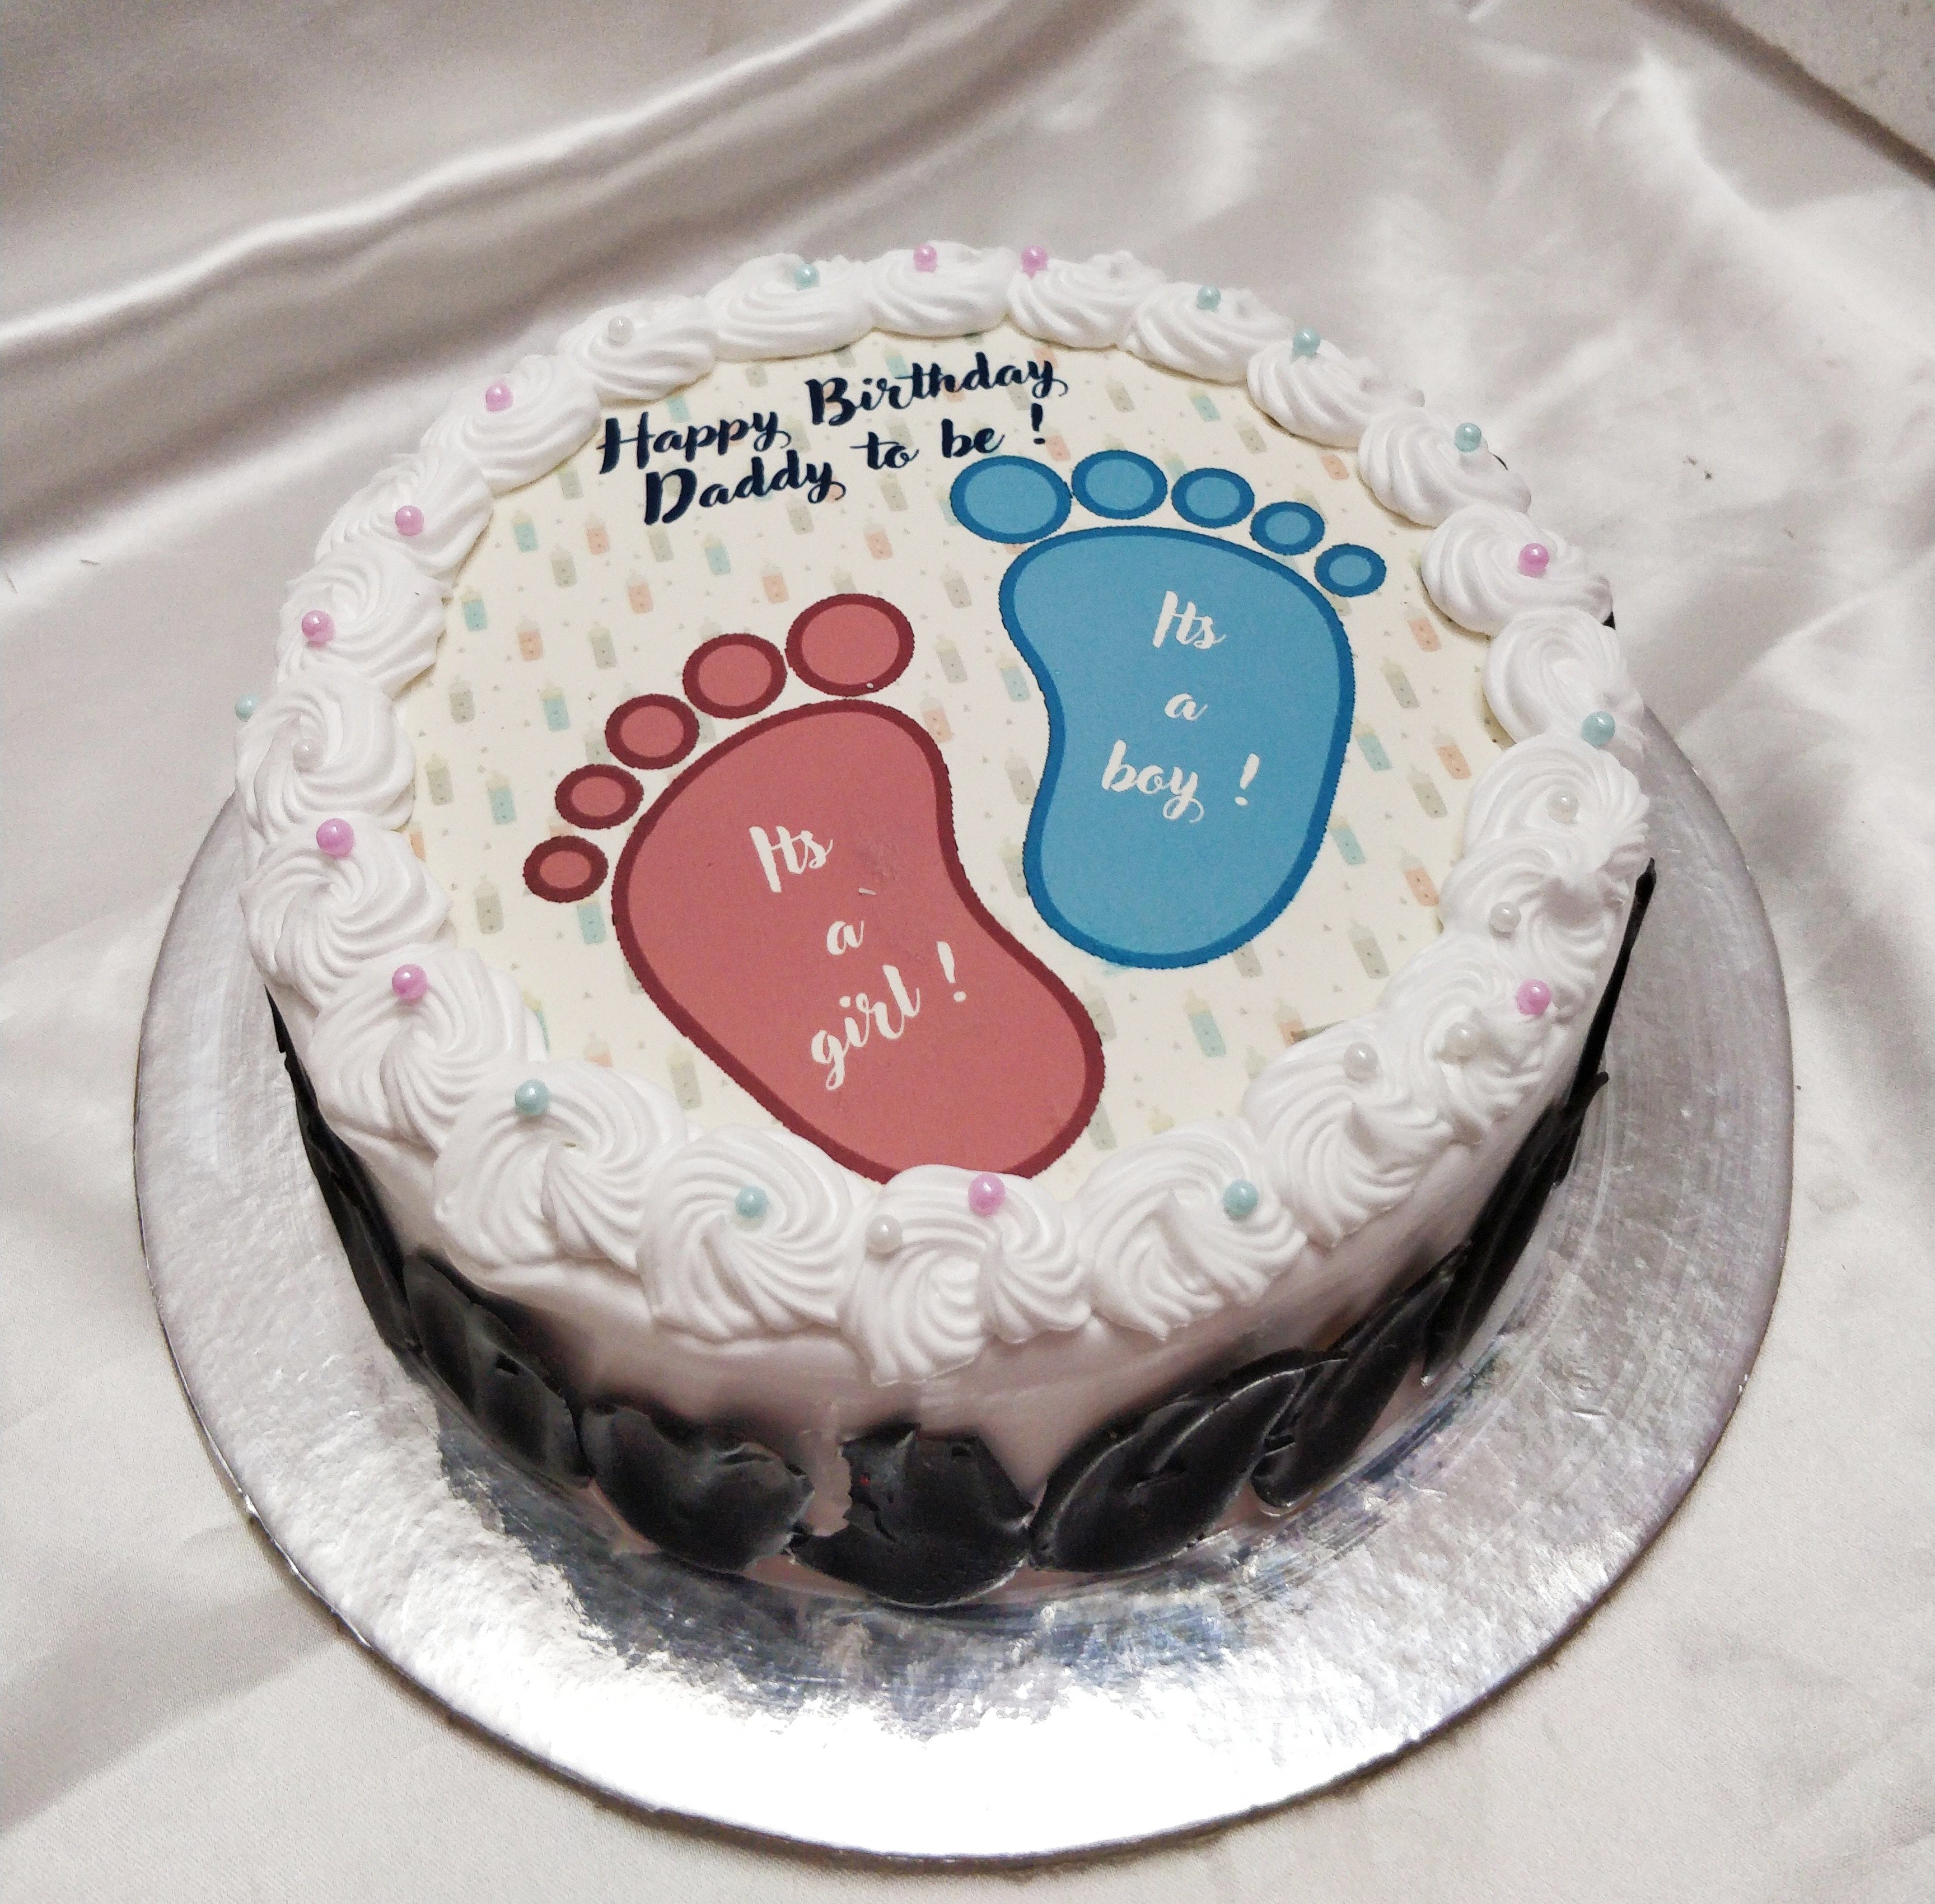 Baby Queen Birthday Cake, baby shower cake recipes